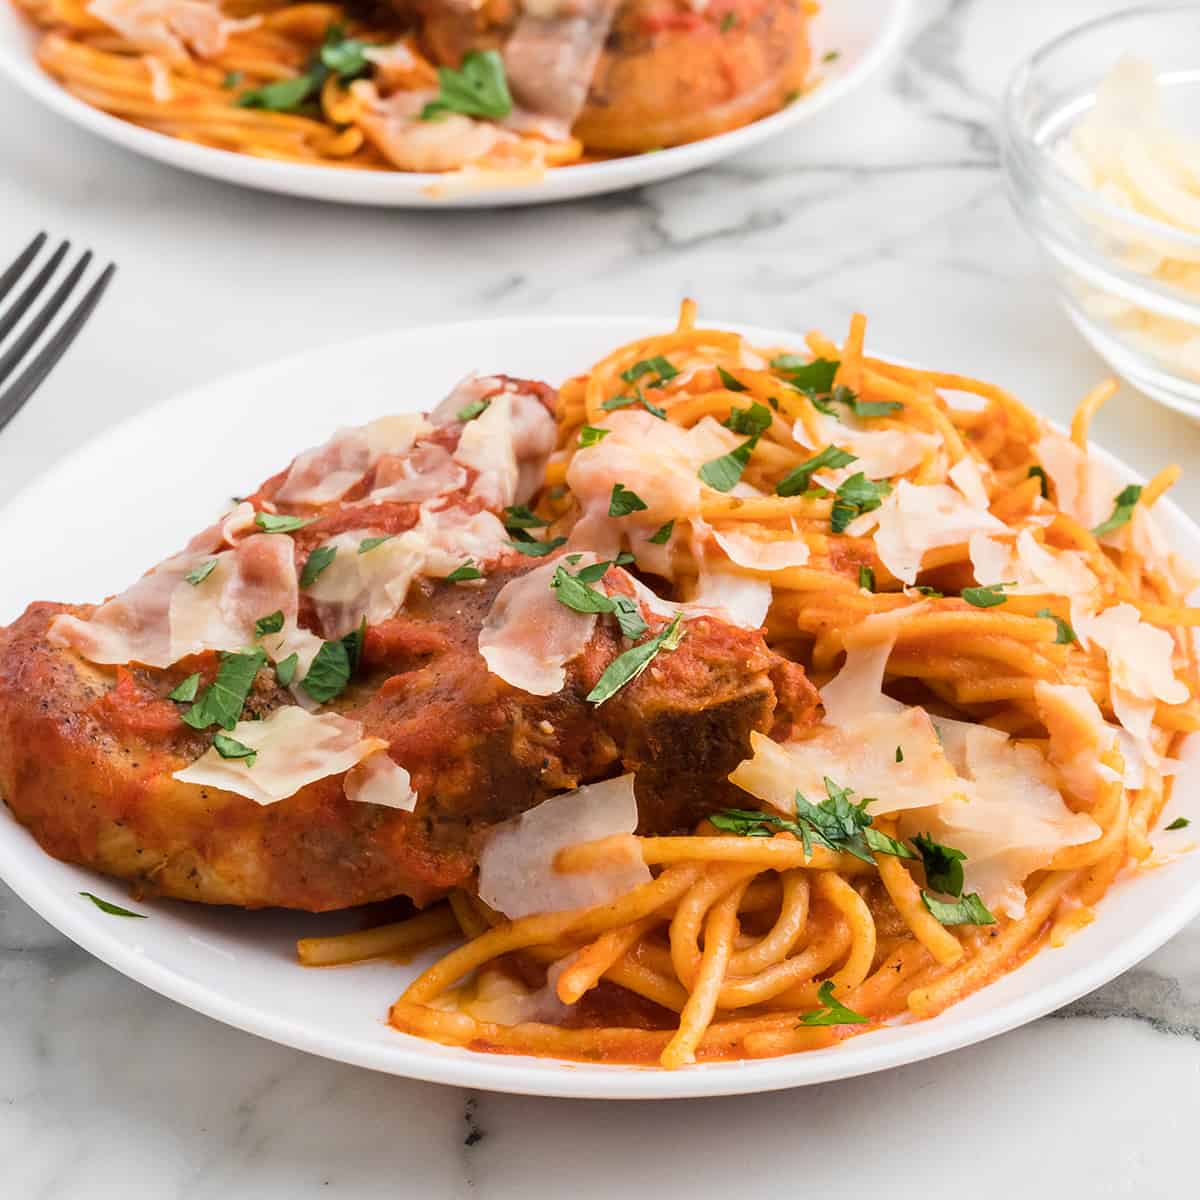 Italian Style Pork Chops with Pasta